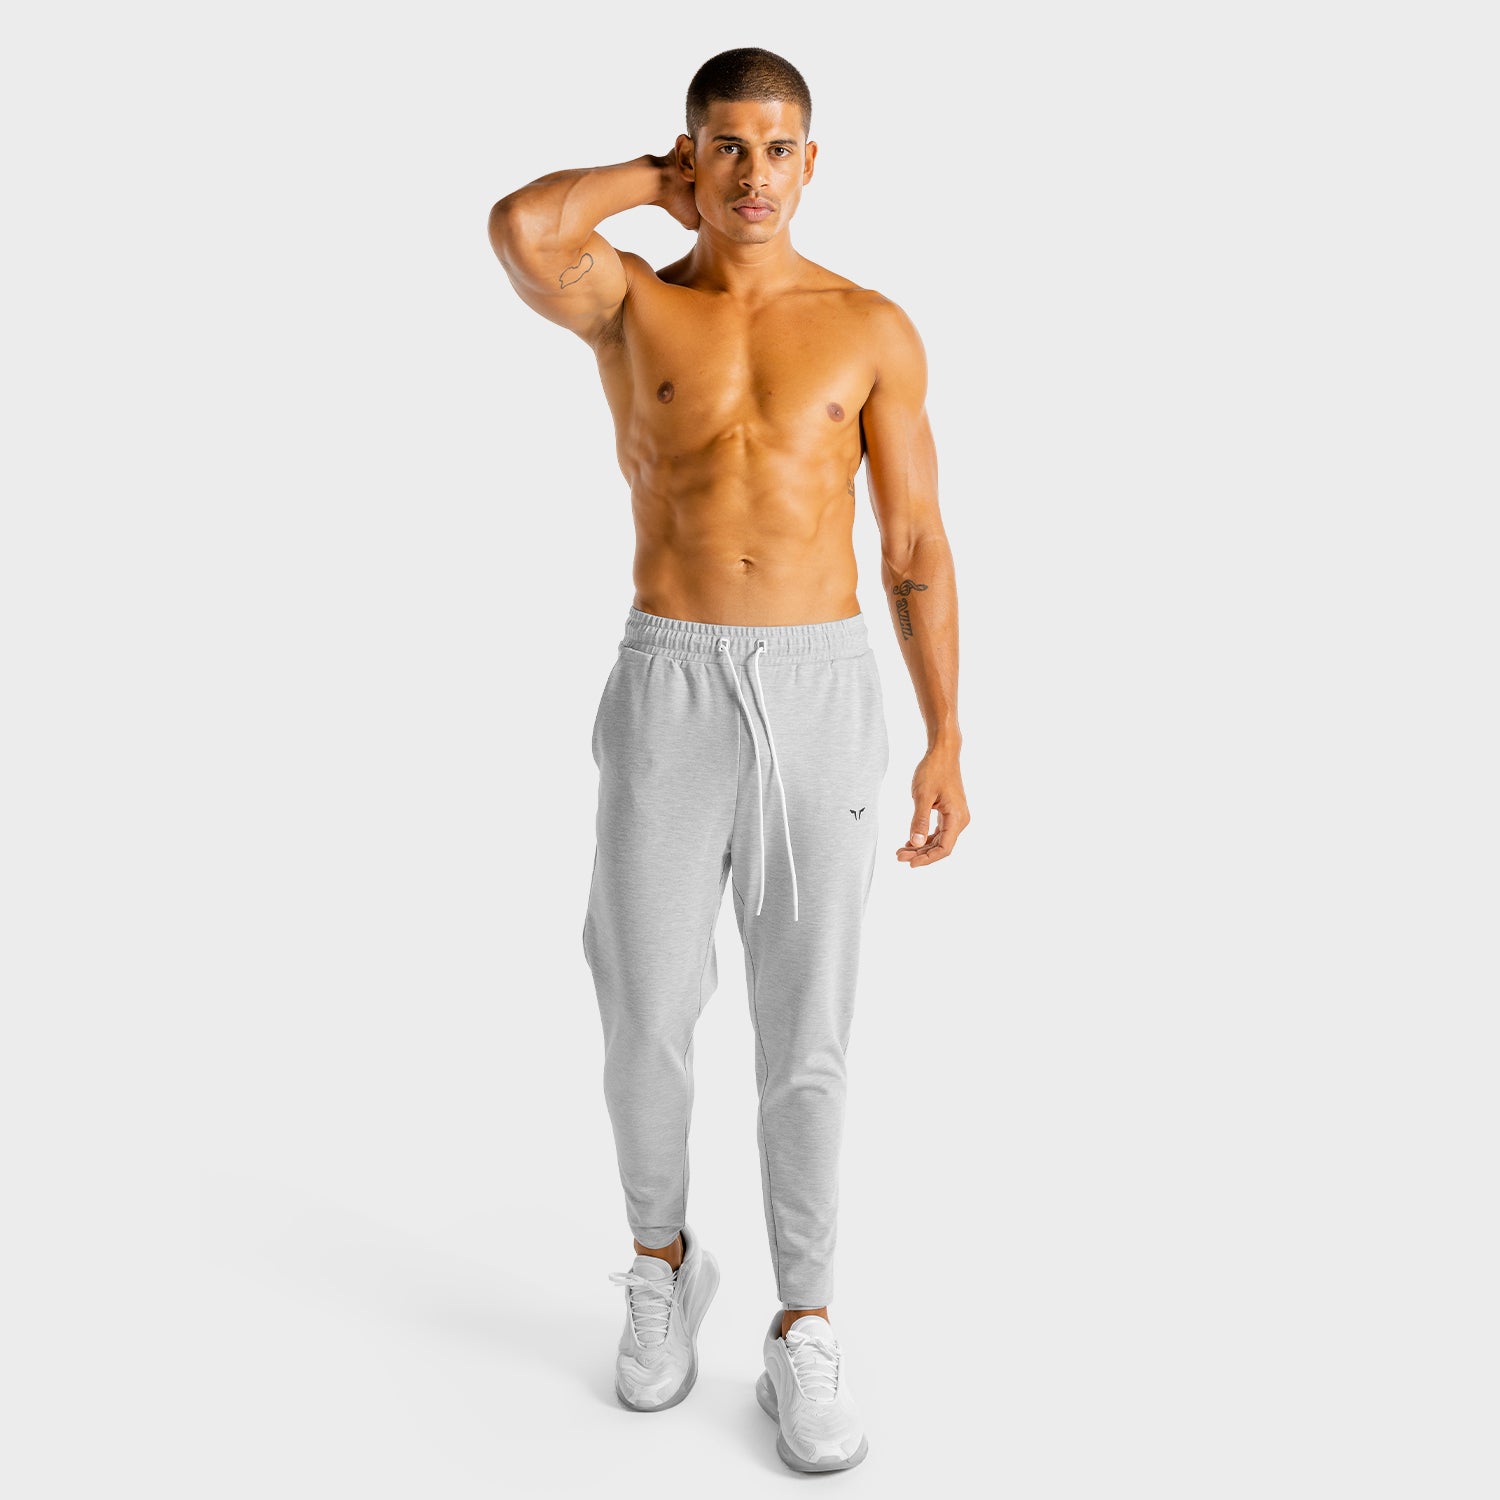 squatwolf-workout-pants-for-men-core-joggers-grey-gym-wear